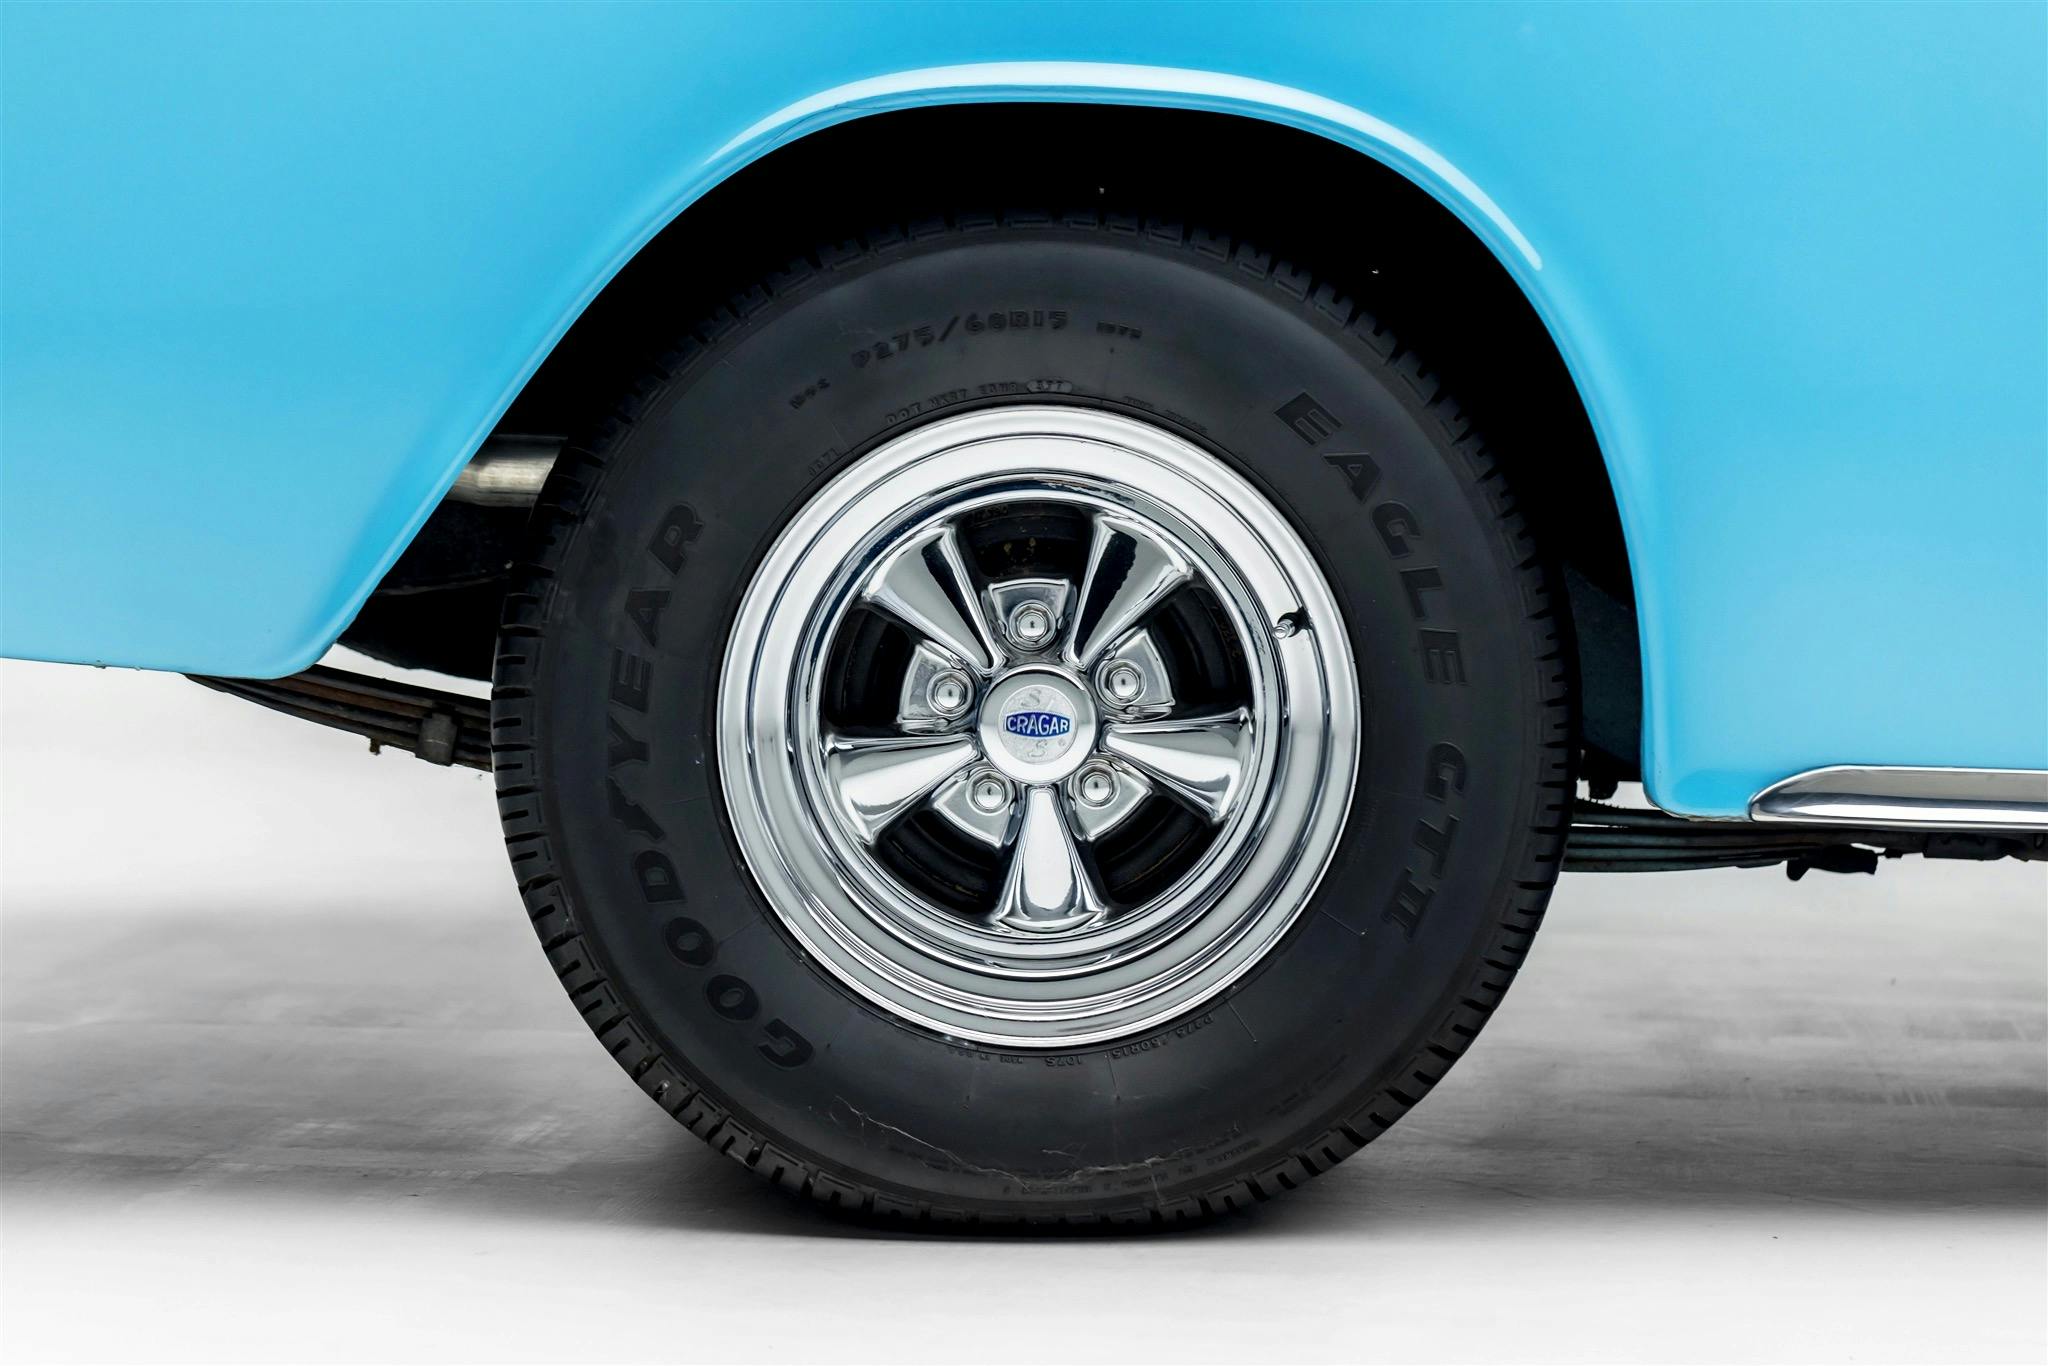 Bruce Willis 1955 Chevrolet Bel Air Nomad cragar wheel tire